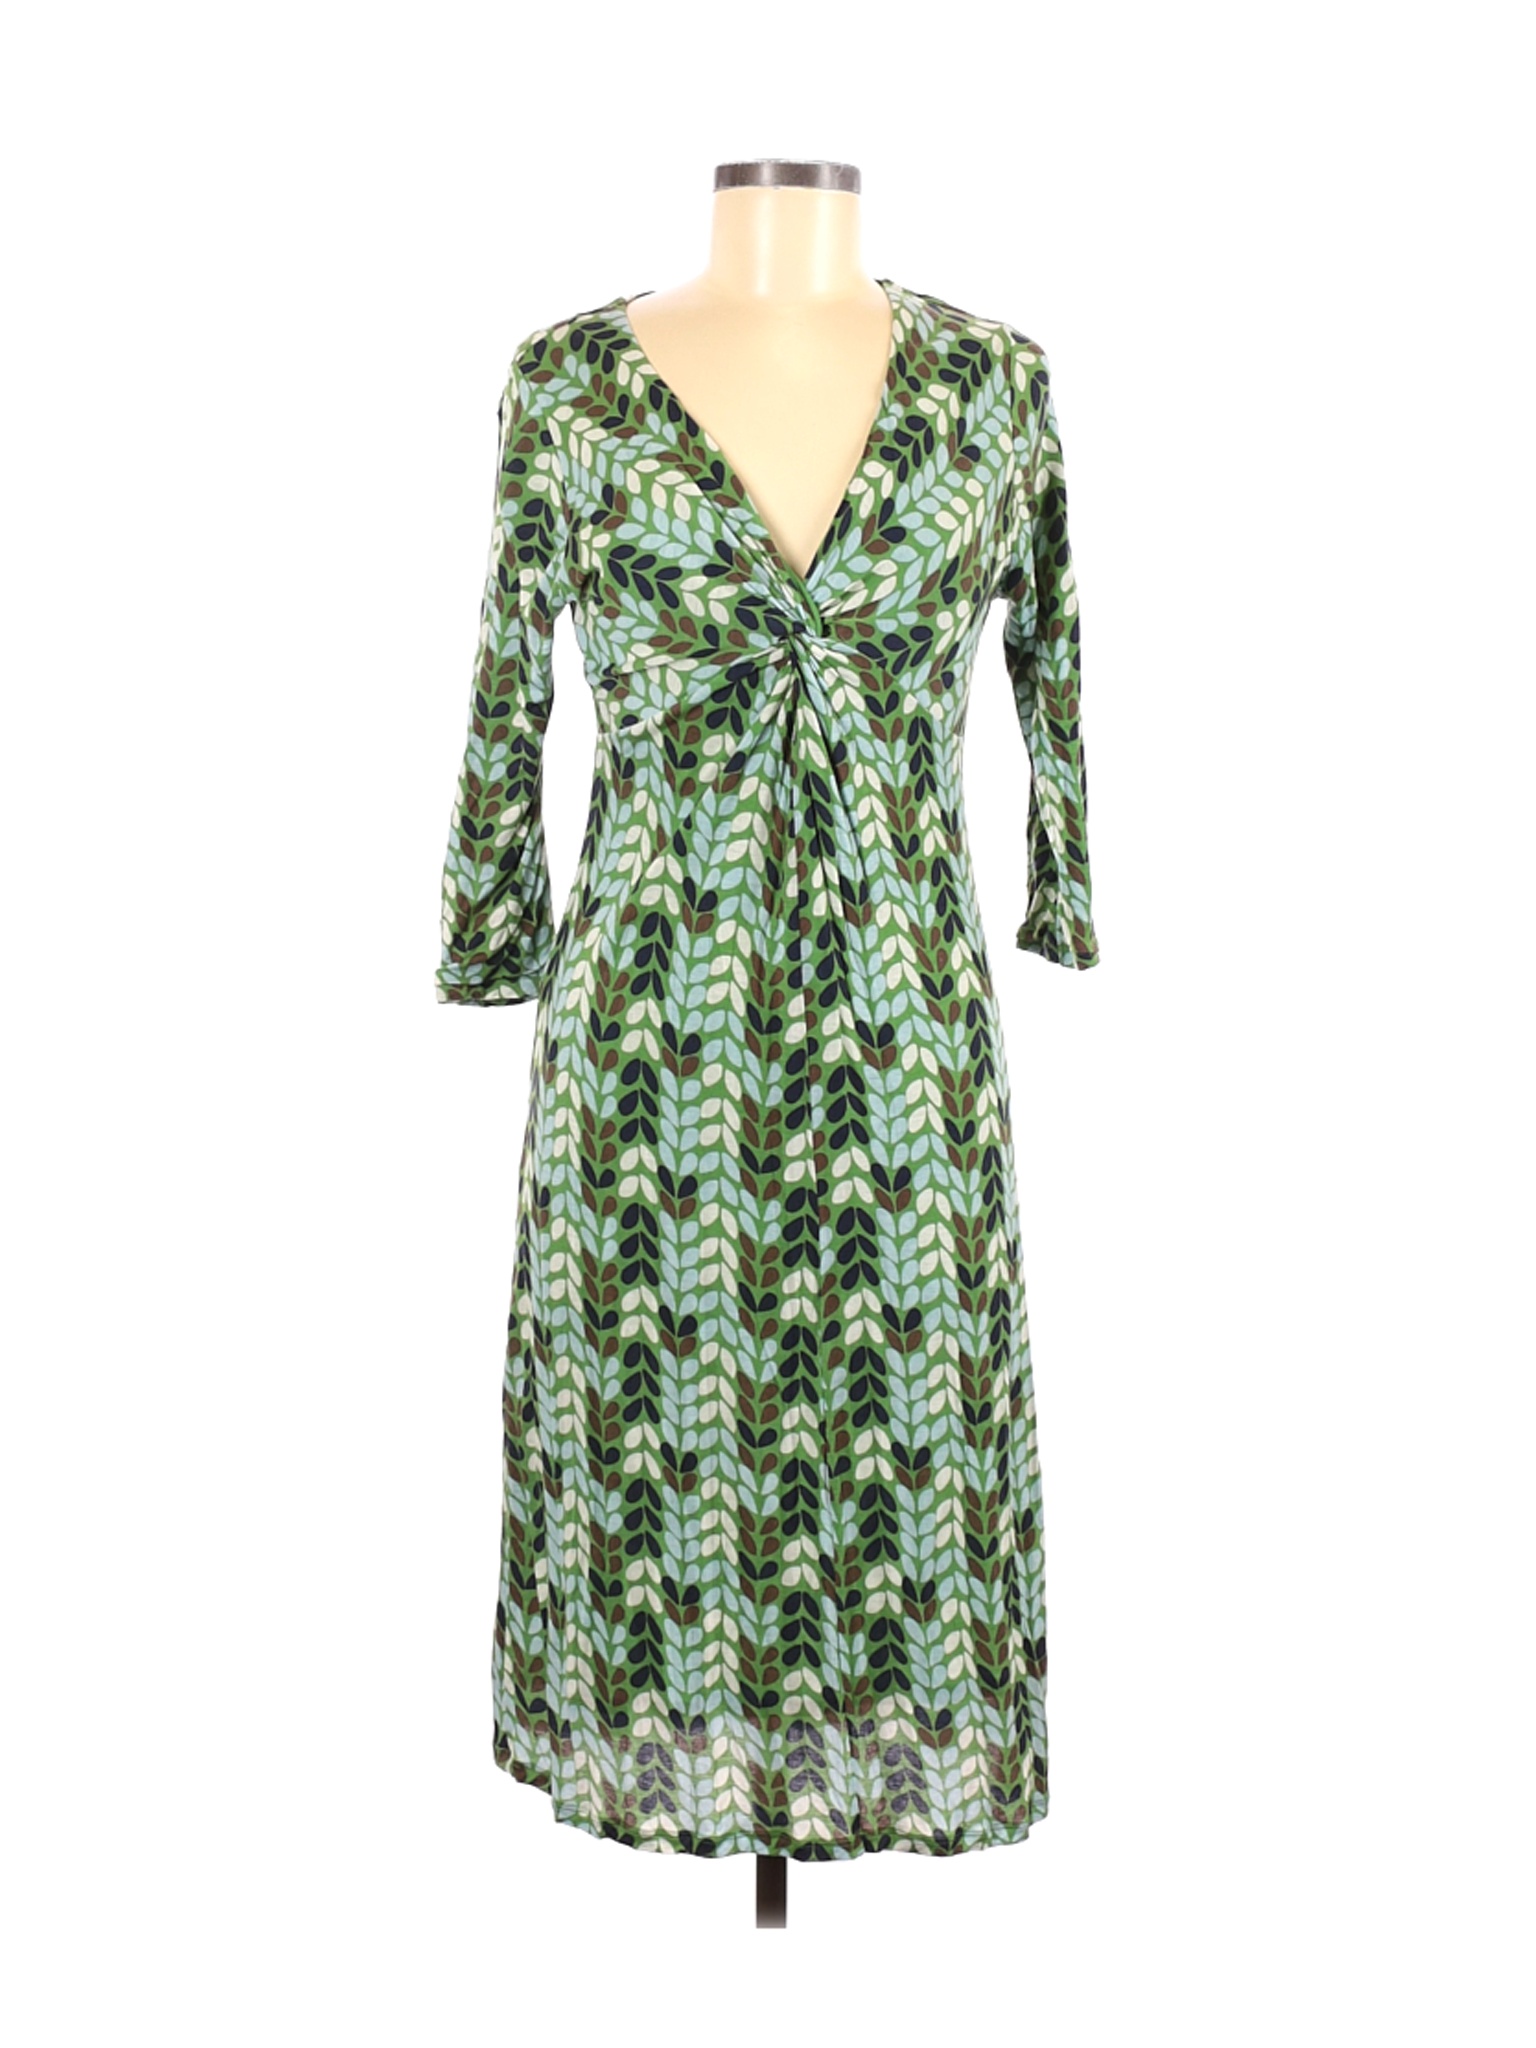 Boden Women Green Casual Dress 8 | eBay